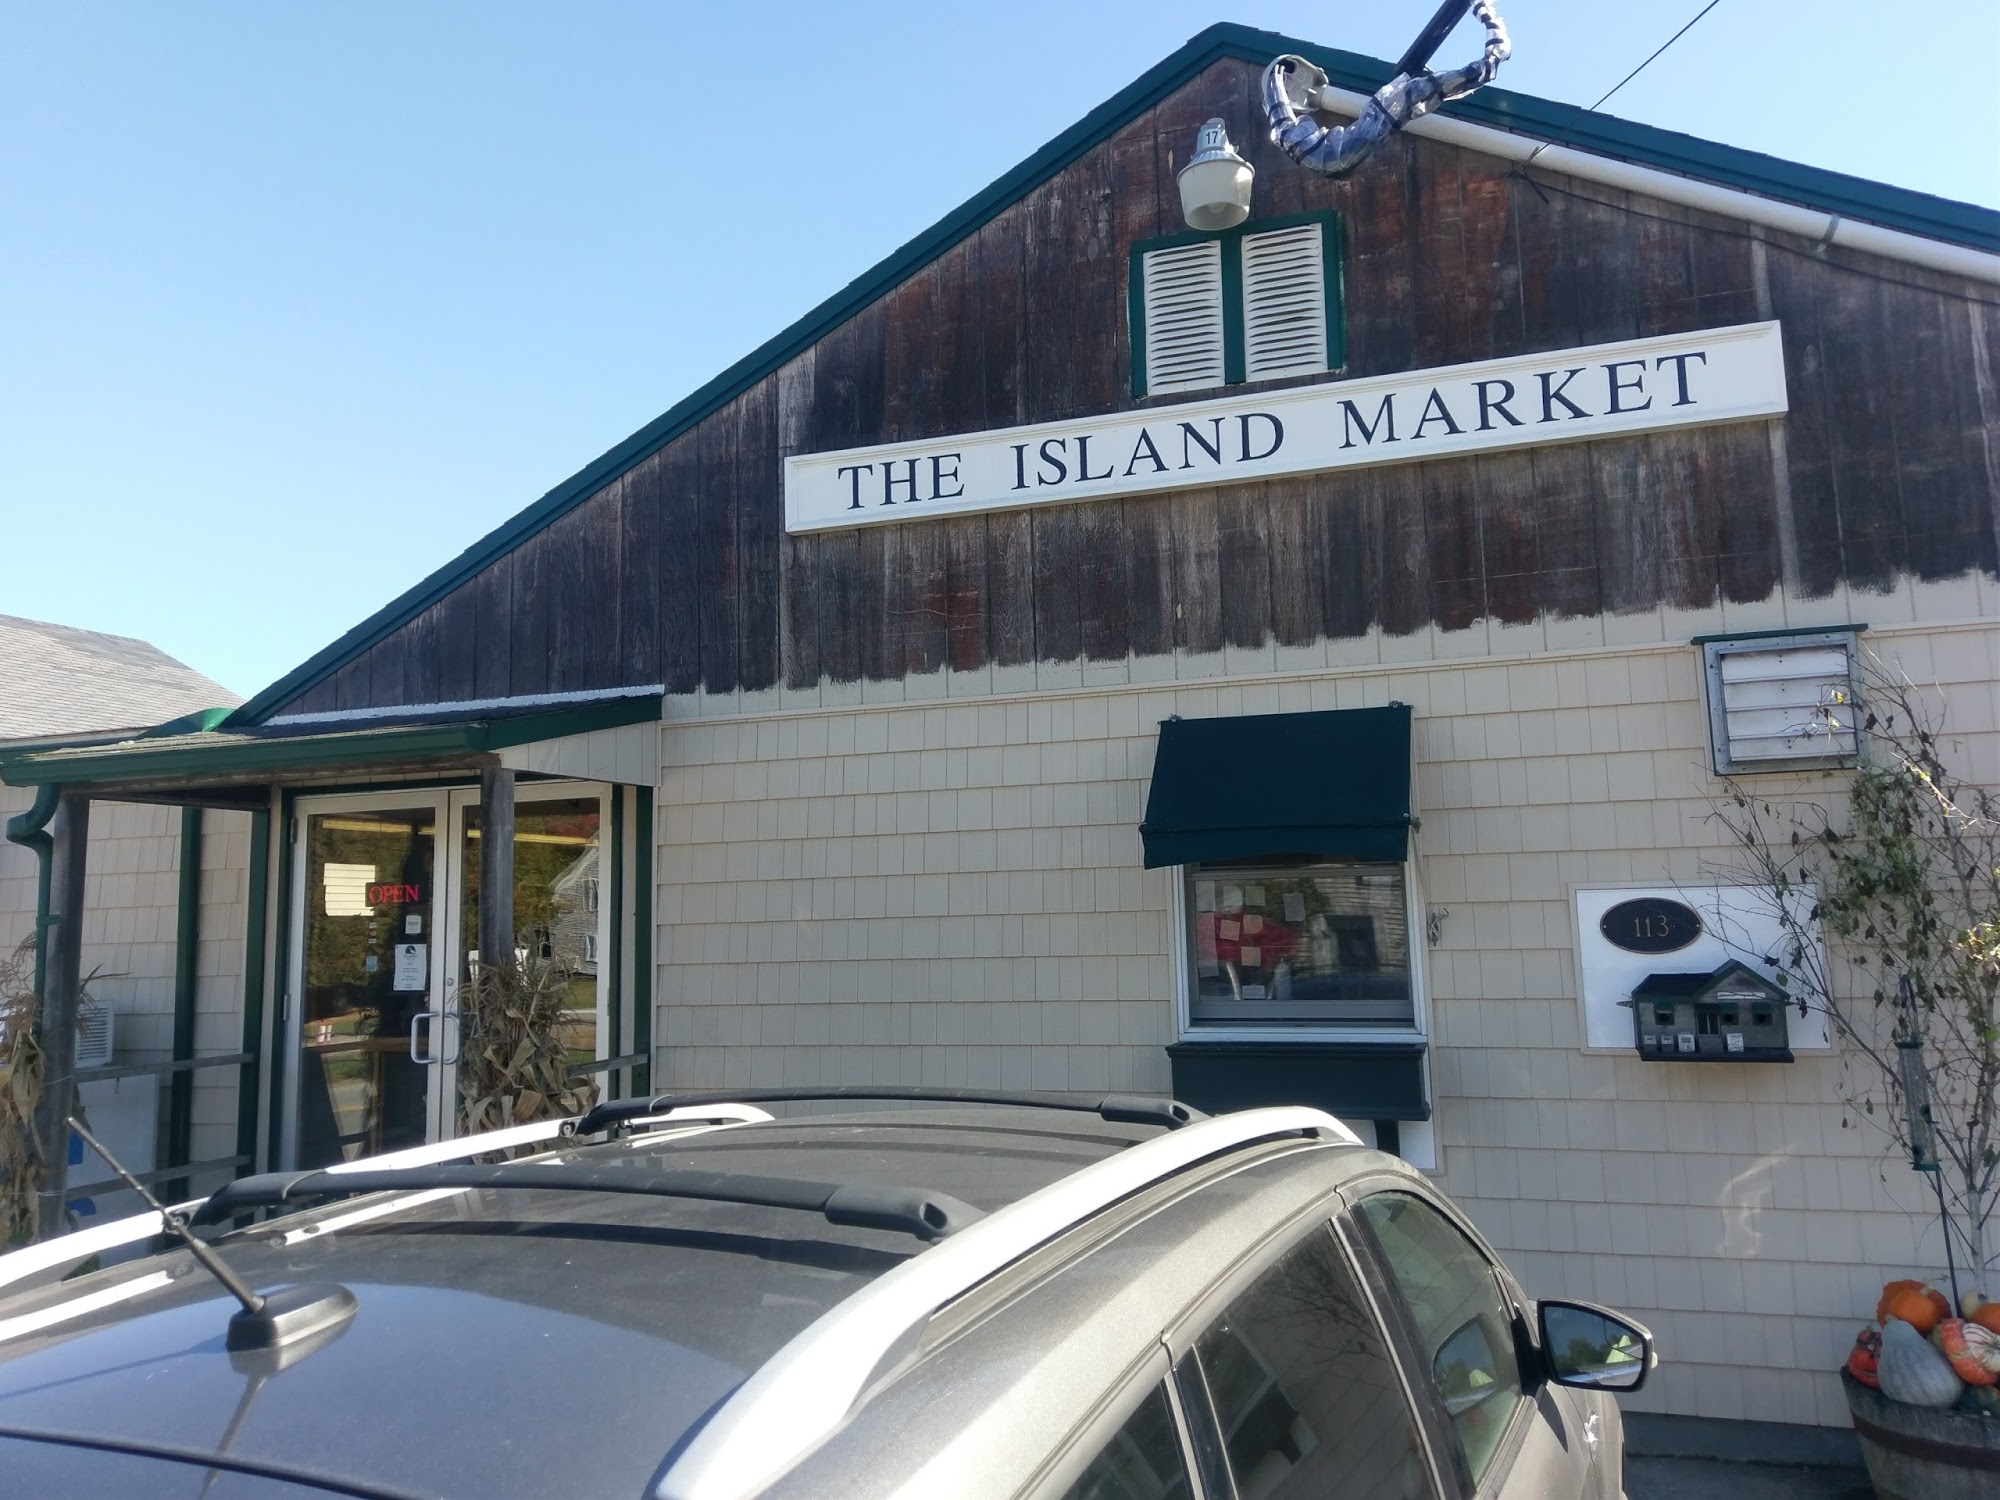 Island Market